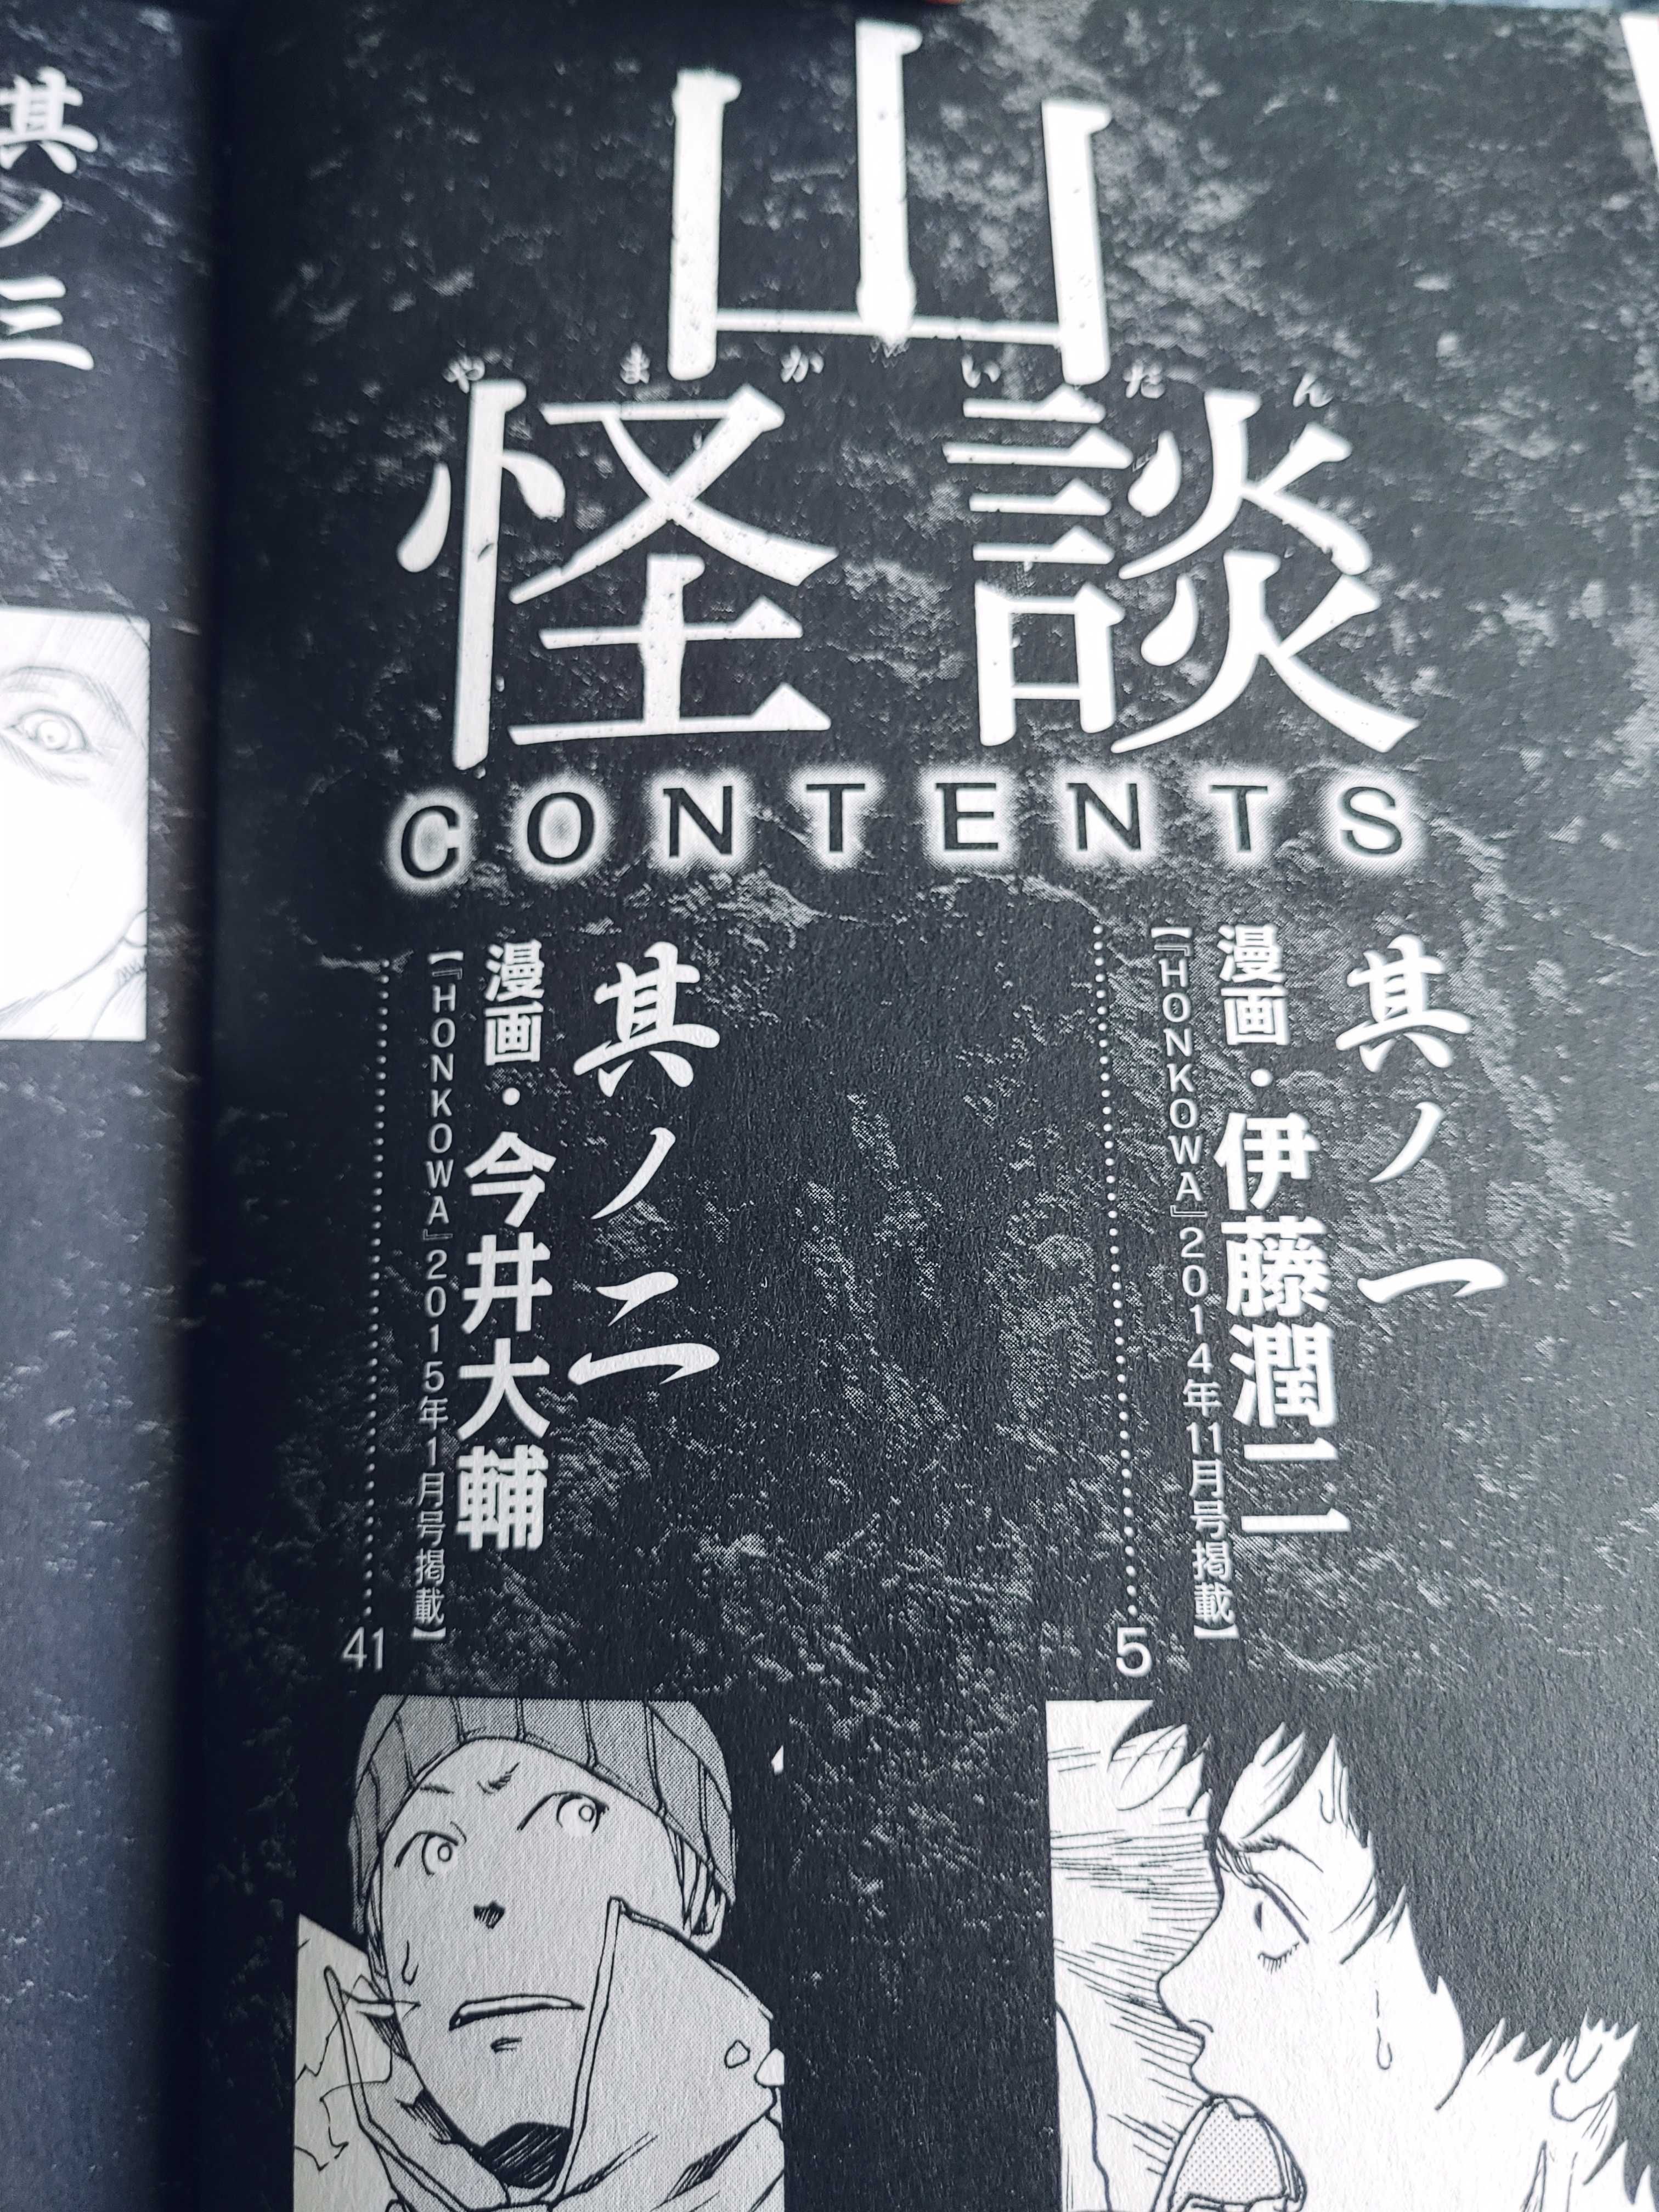 Manga po japońsku Junji Ito i inni